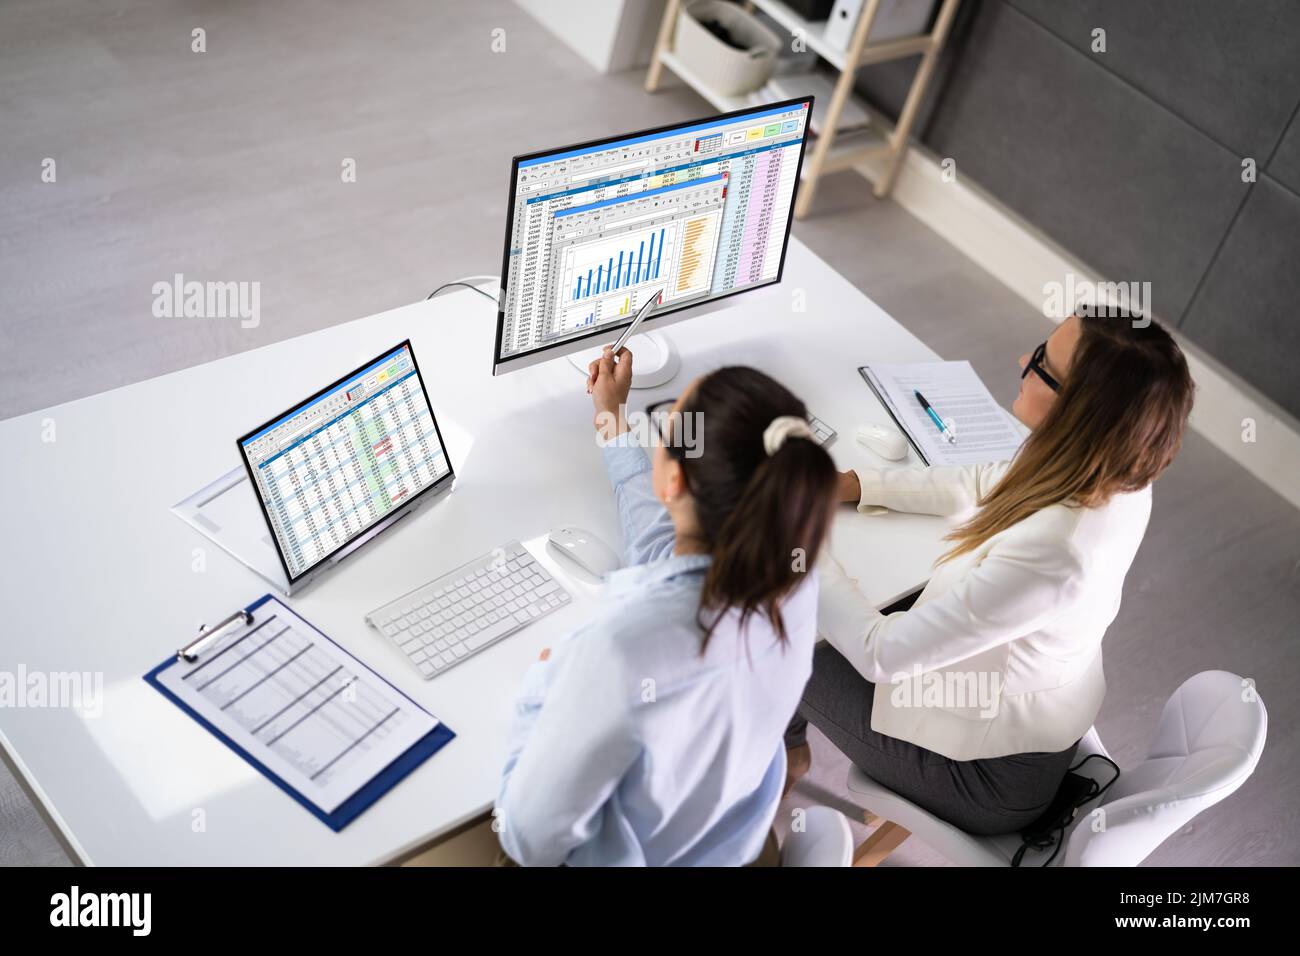 Analyst Employee Working On Spreadsheet Using Desktop Computer Stock Photo